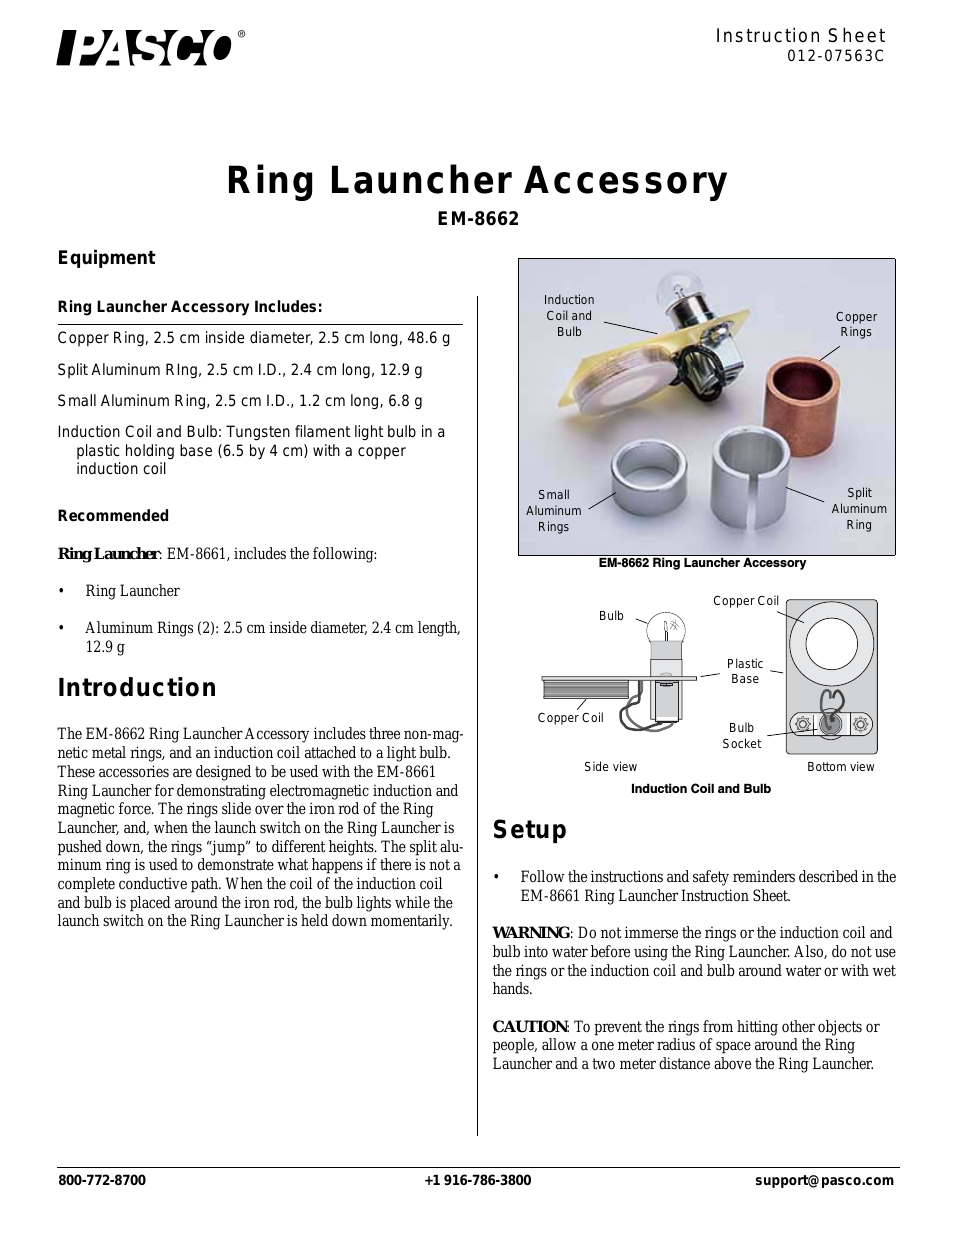 EM-8662 Ring Launcher Accessories